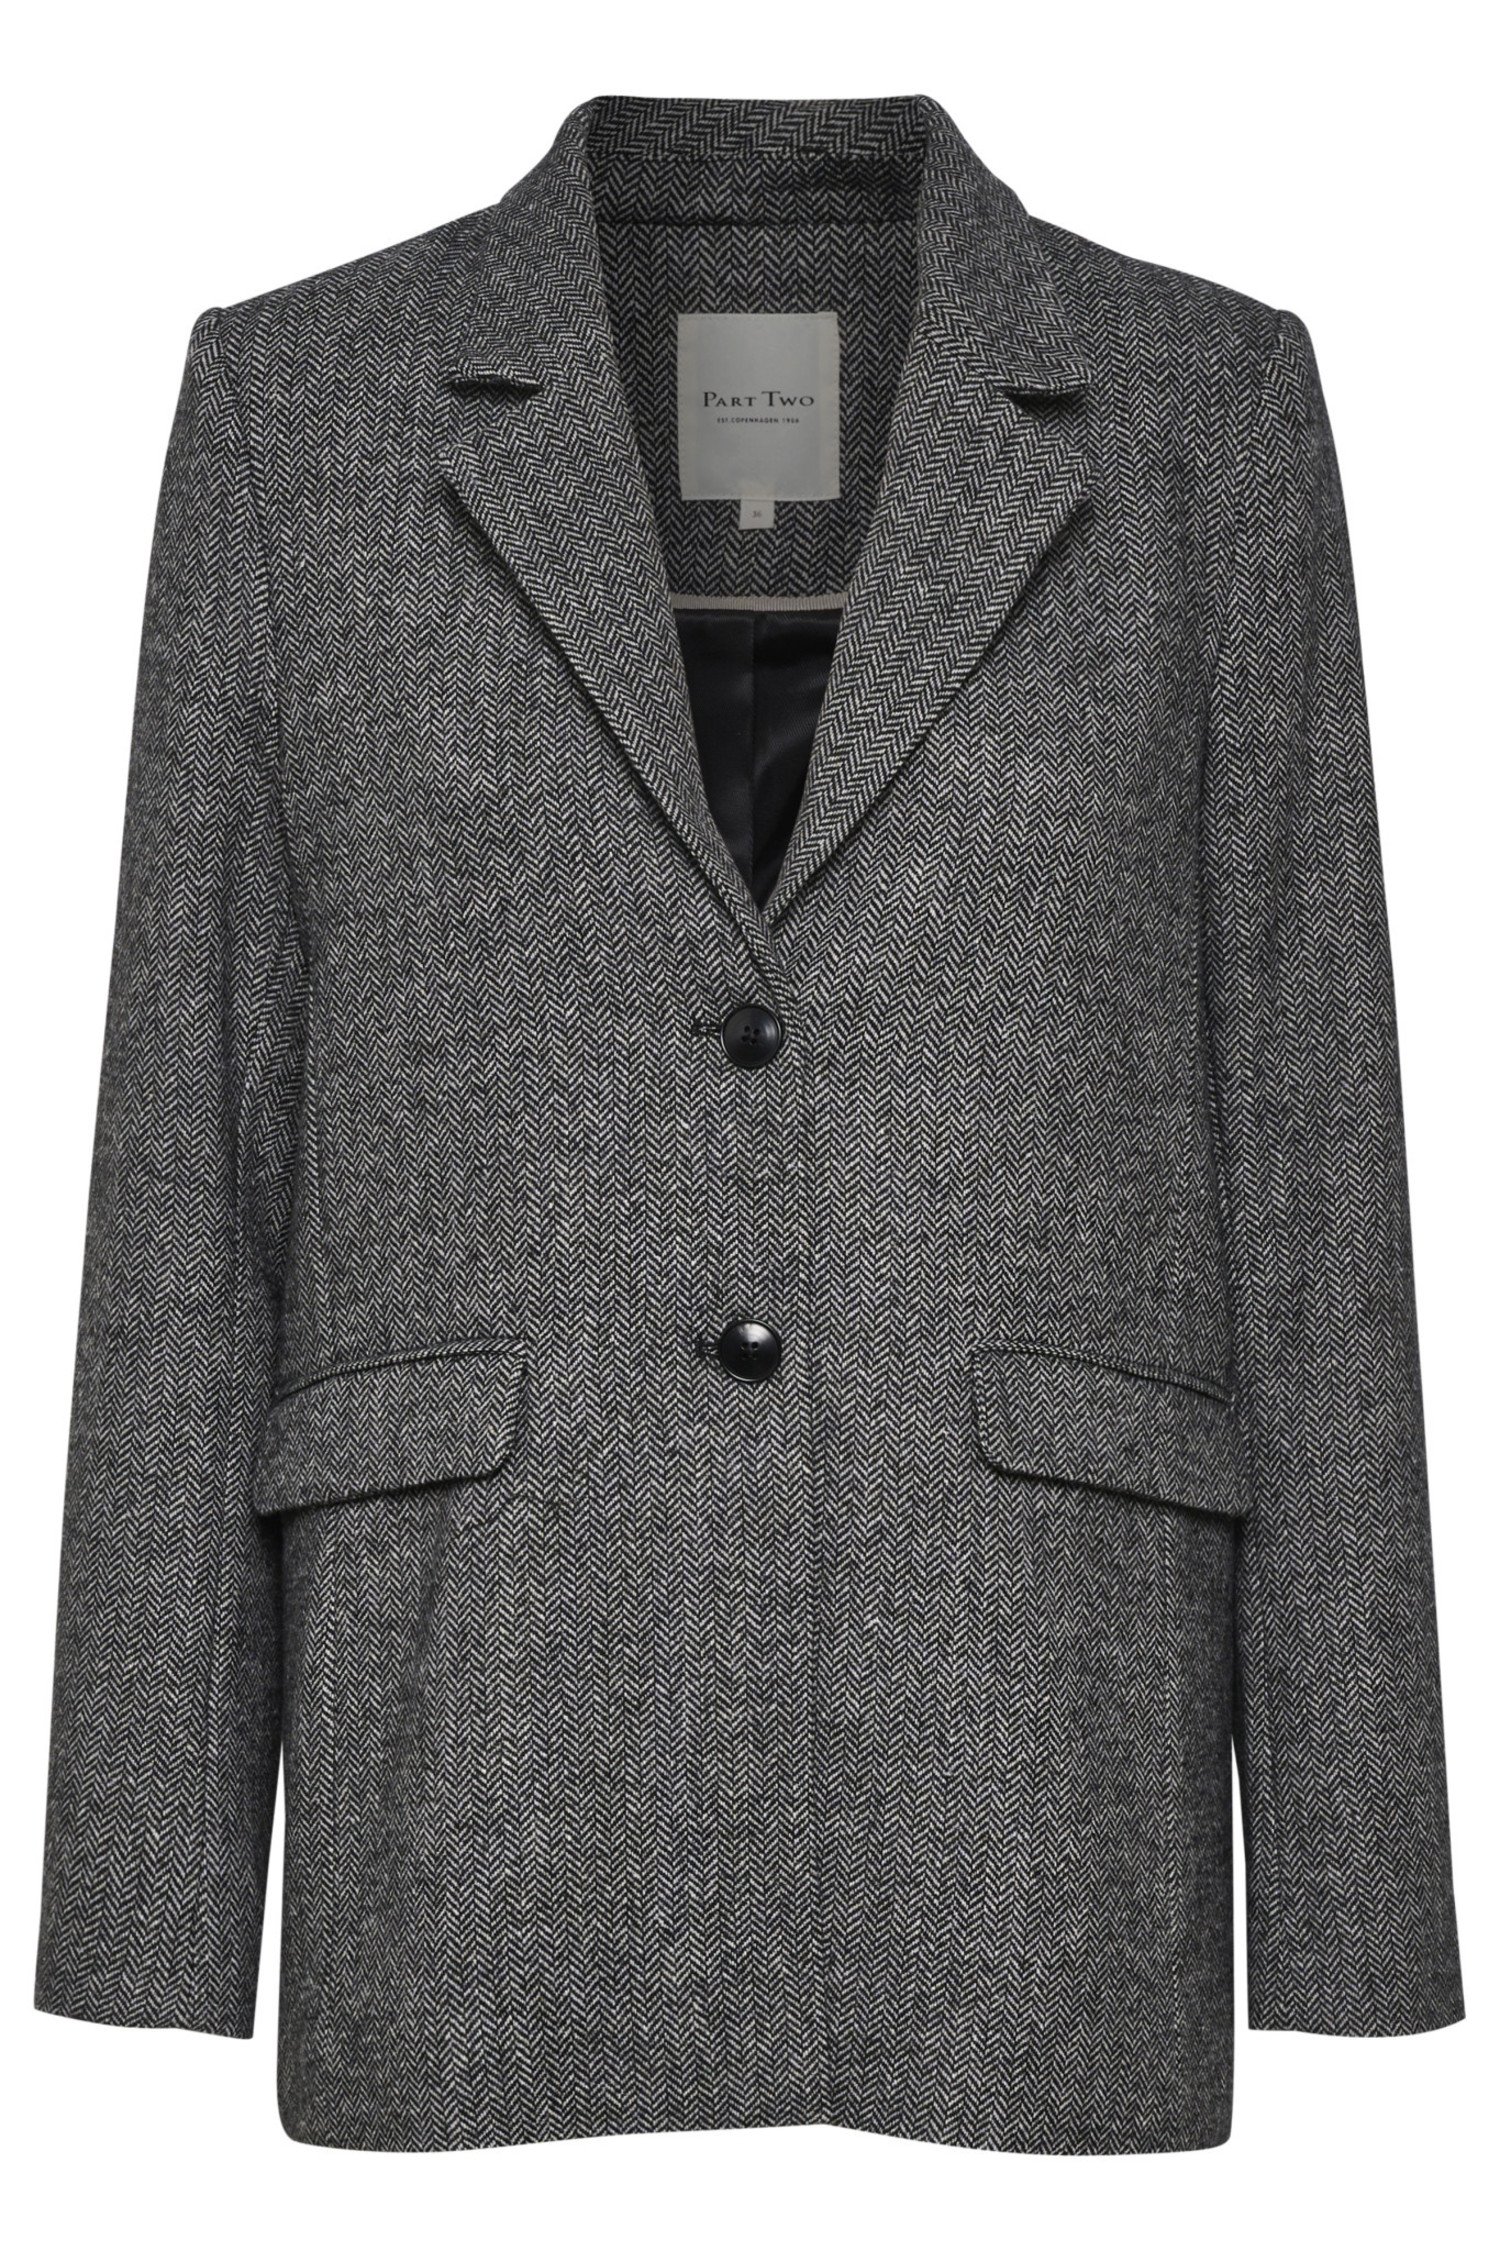 NWT Talbots Double Face Wool Two Tone Black Gray Blazer Jacket Sz 16 $289